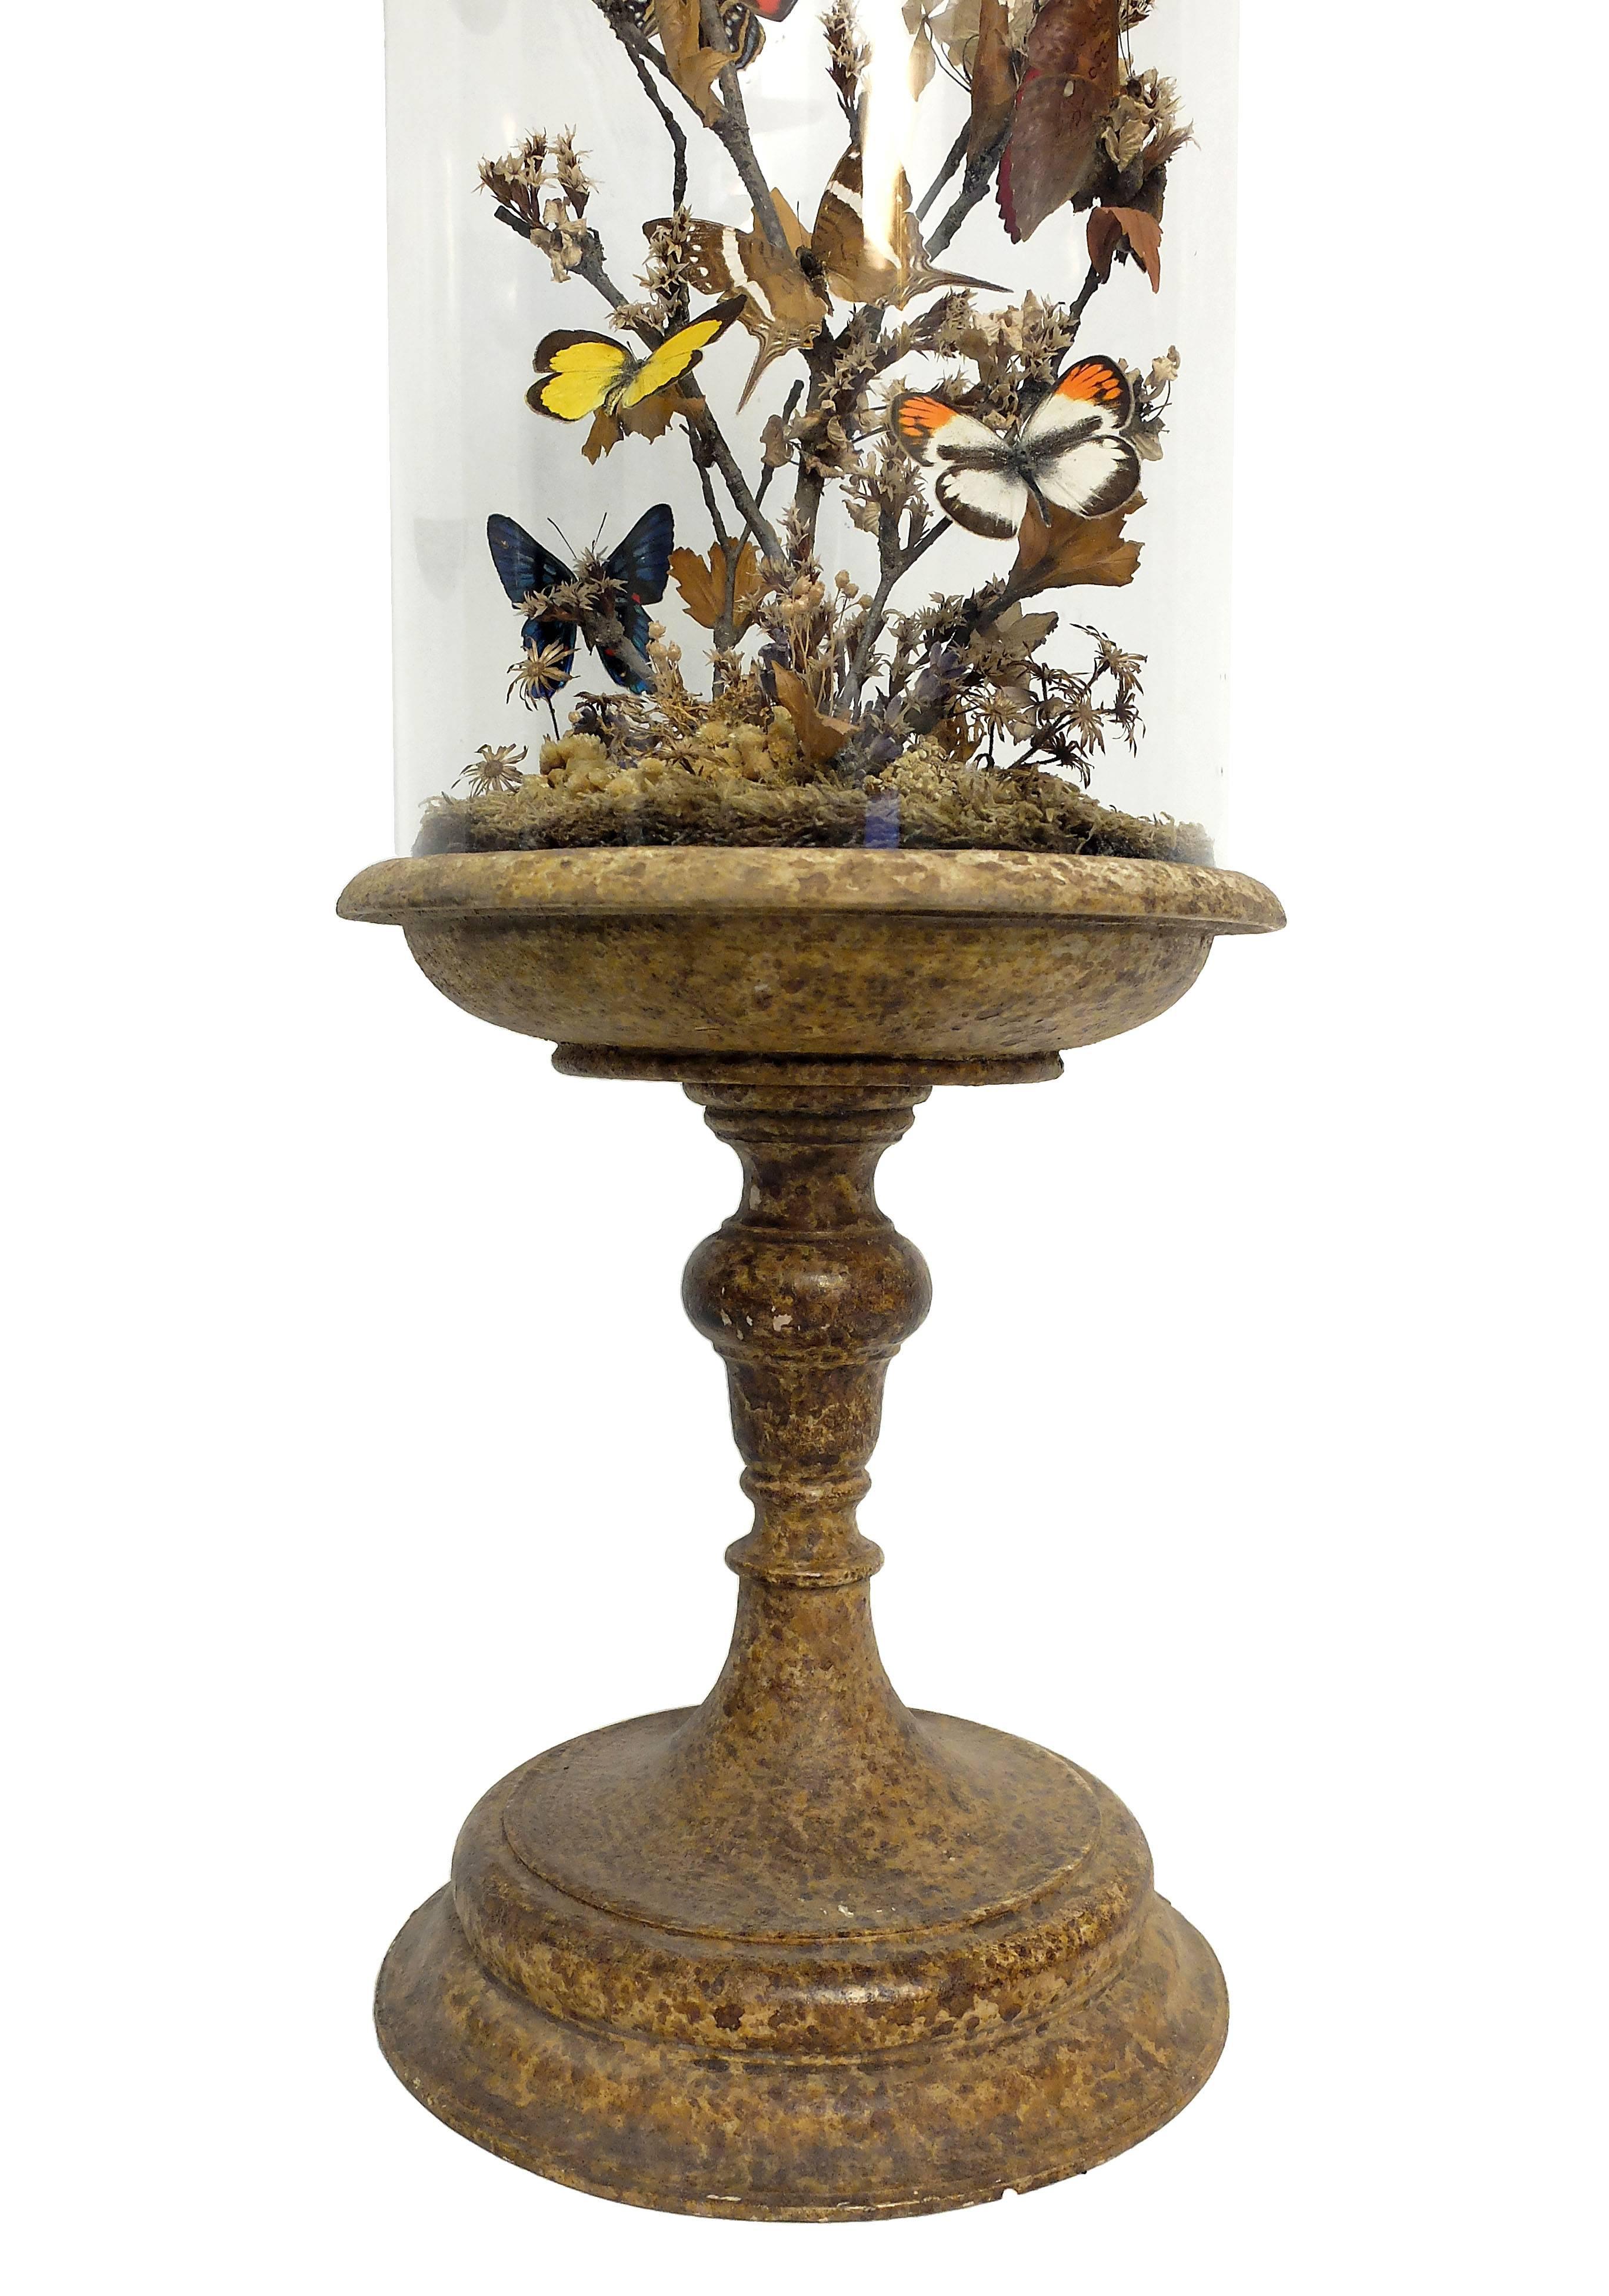 Natural Fiber Butterfly Diorama, a Splendid Wunderkammer Natural Specimen, Italy, circa 1880